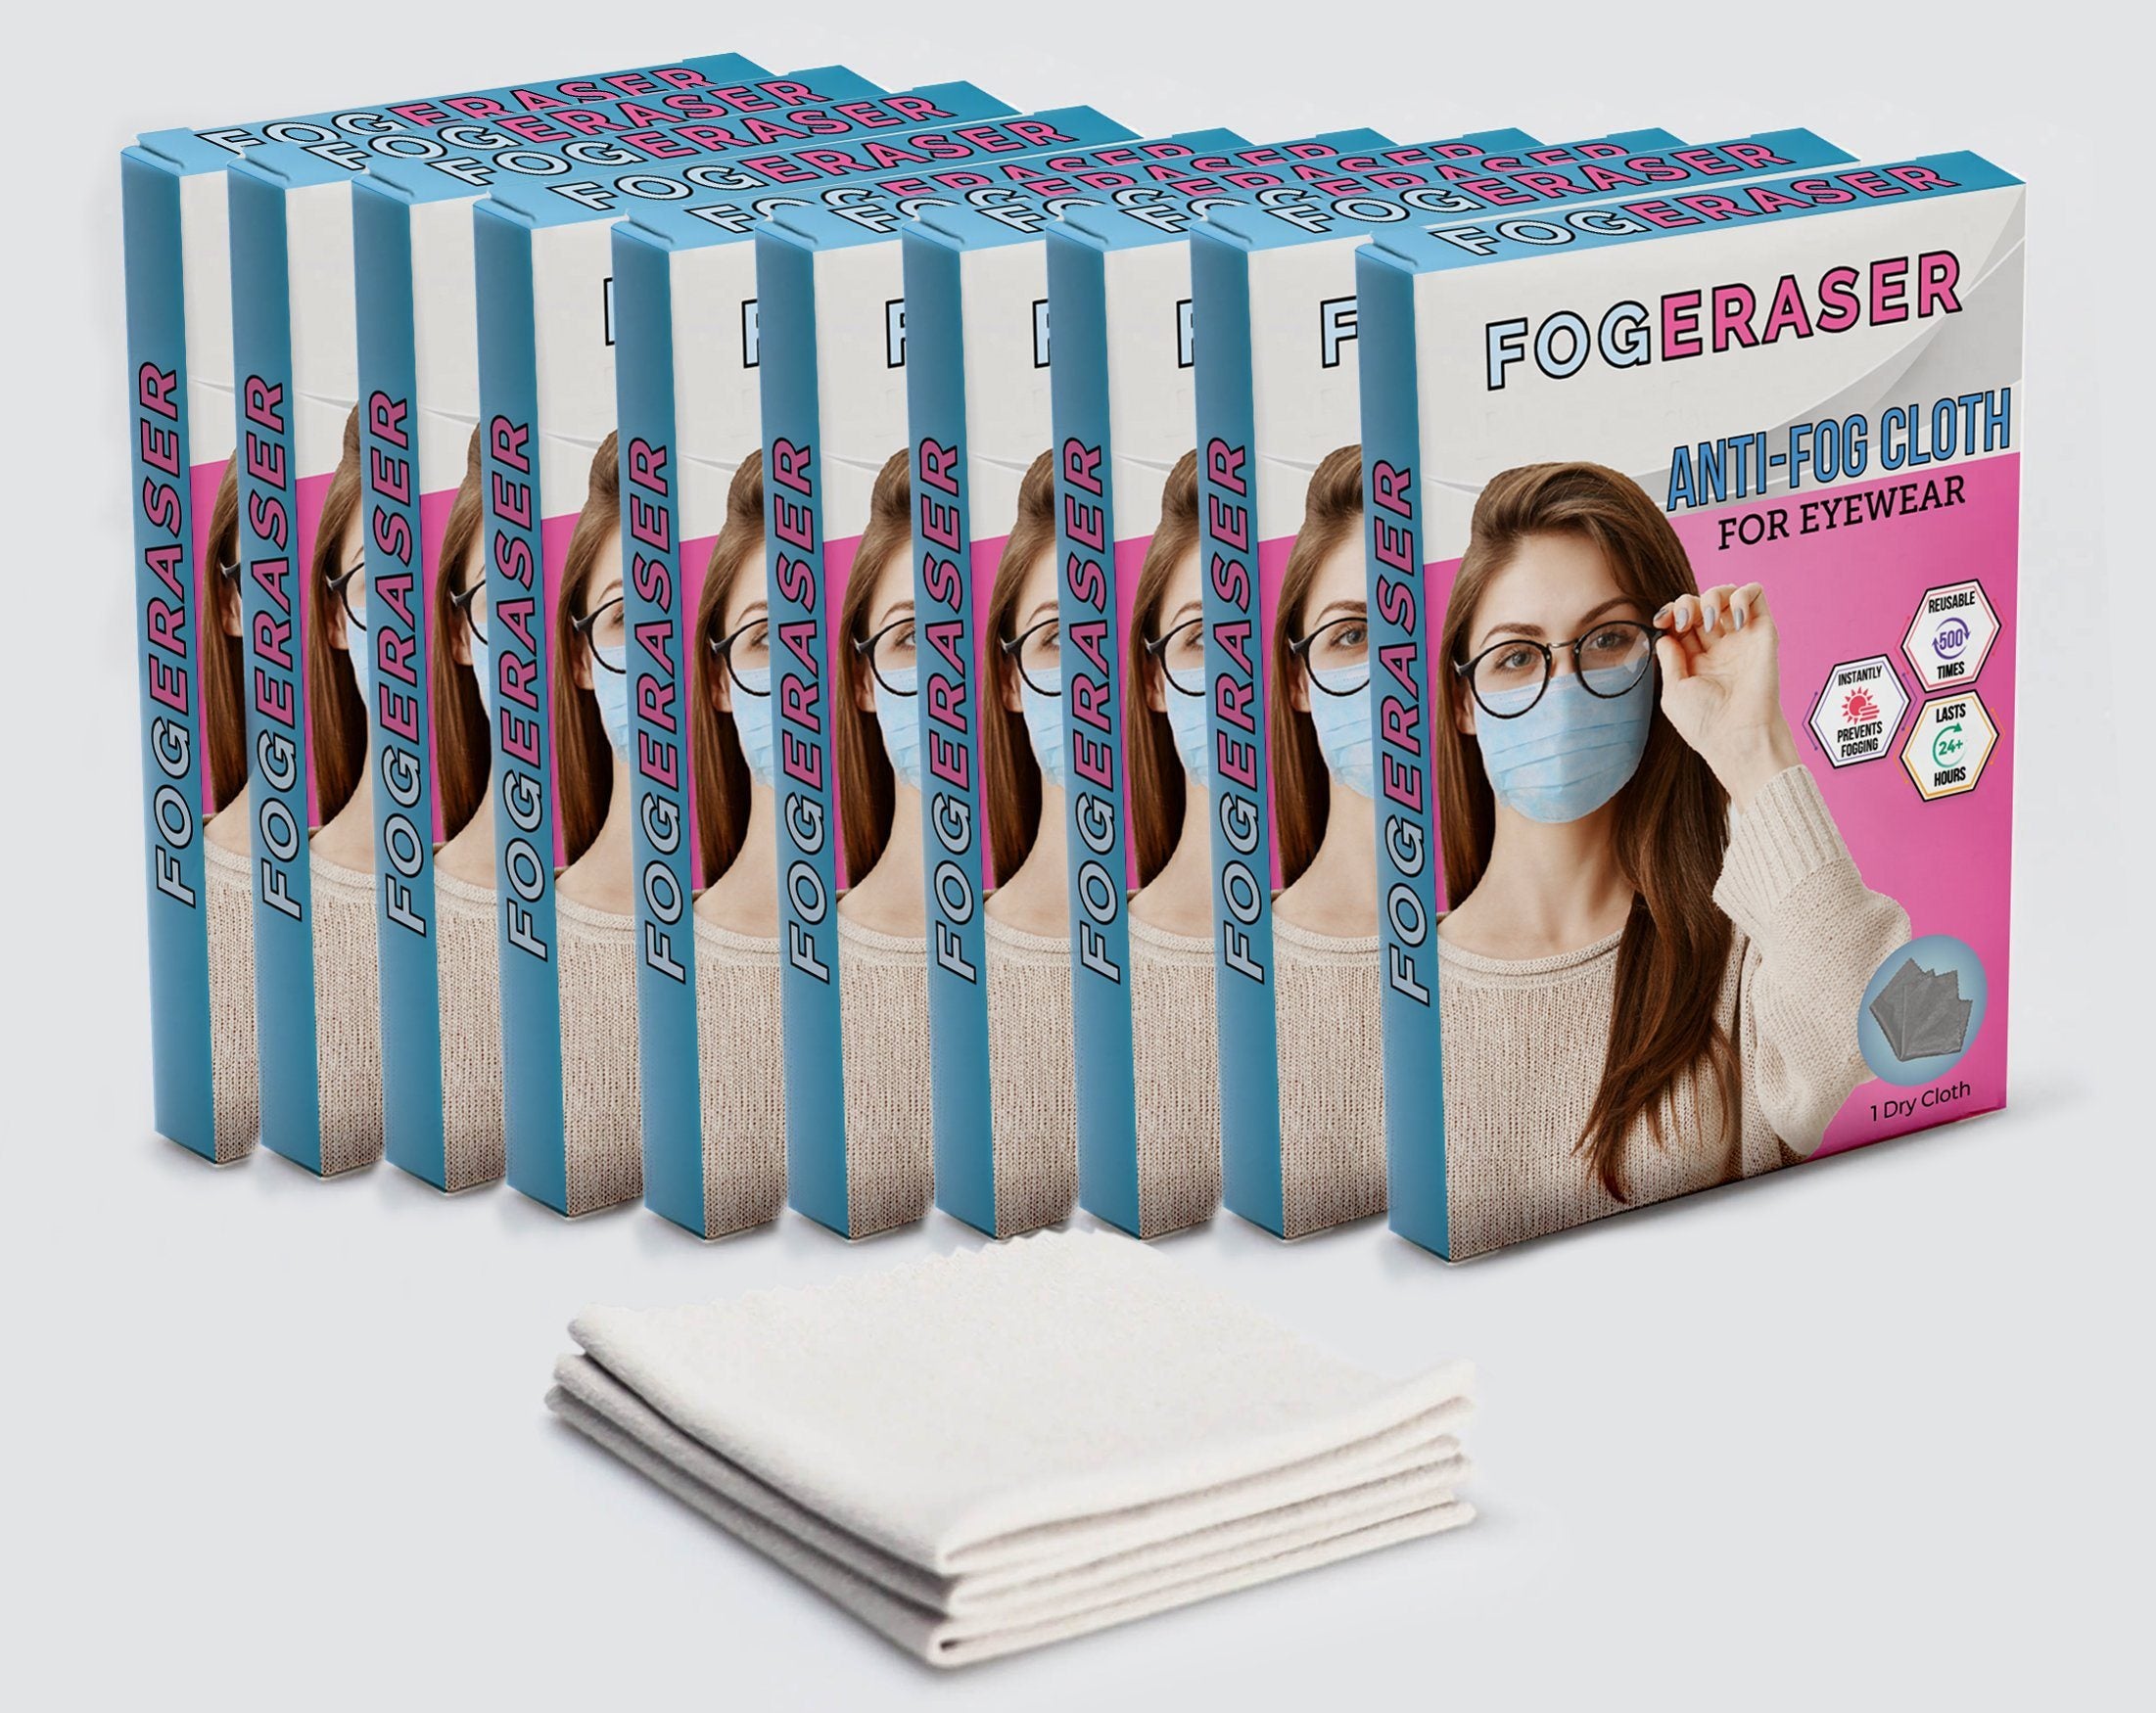 FogEraser Anti-Fog Cloth Fog Eraser 10 Pack 